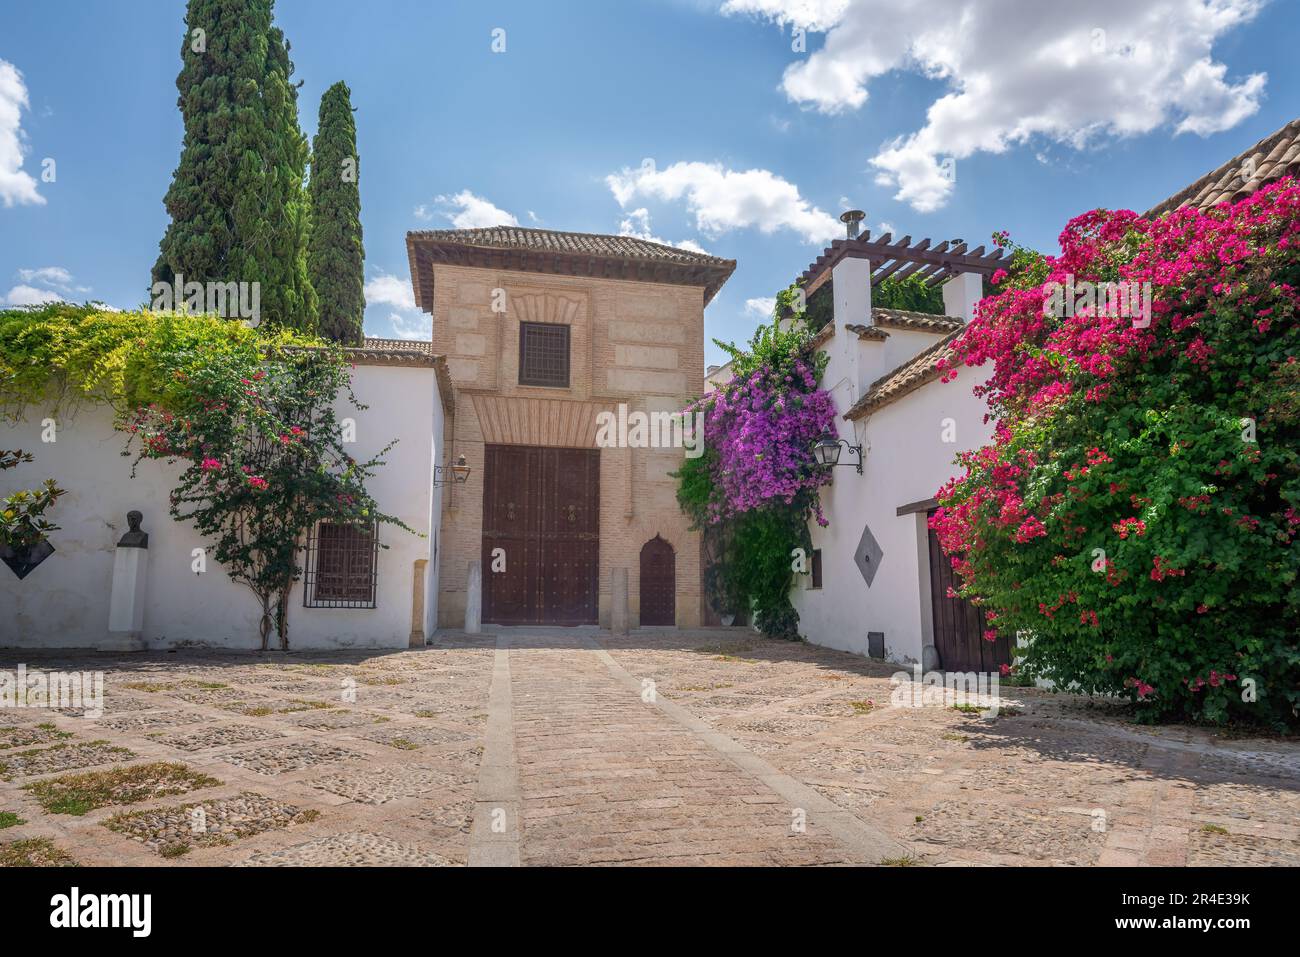 Casa del Judio (Jews House) at Plaza de Jeronimo Paez - Cordoba, Andalusia, Spain Stock Photo